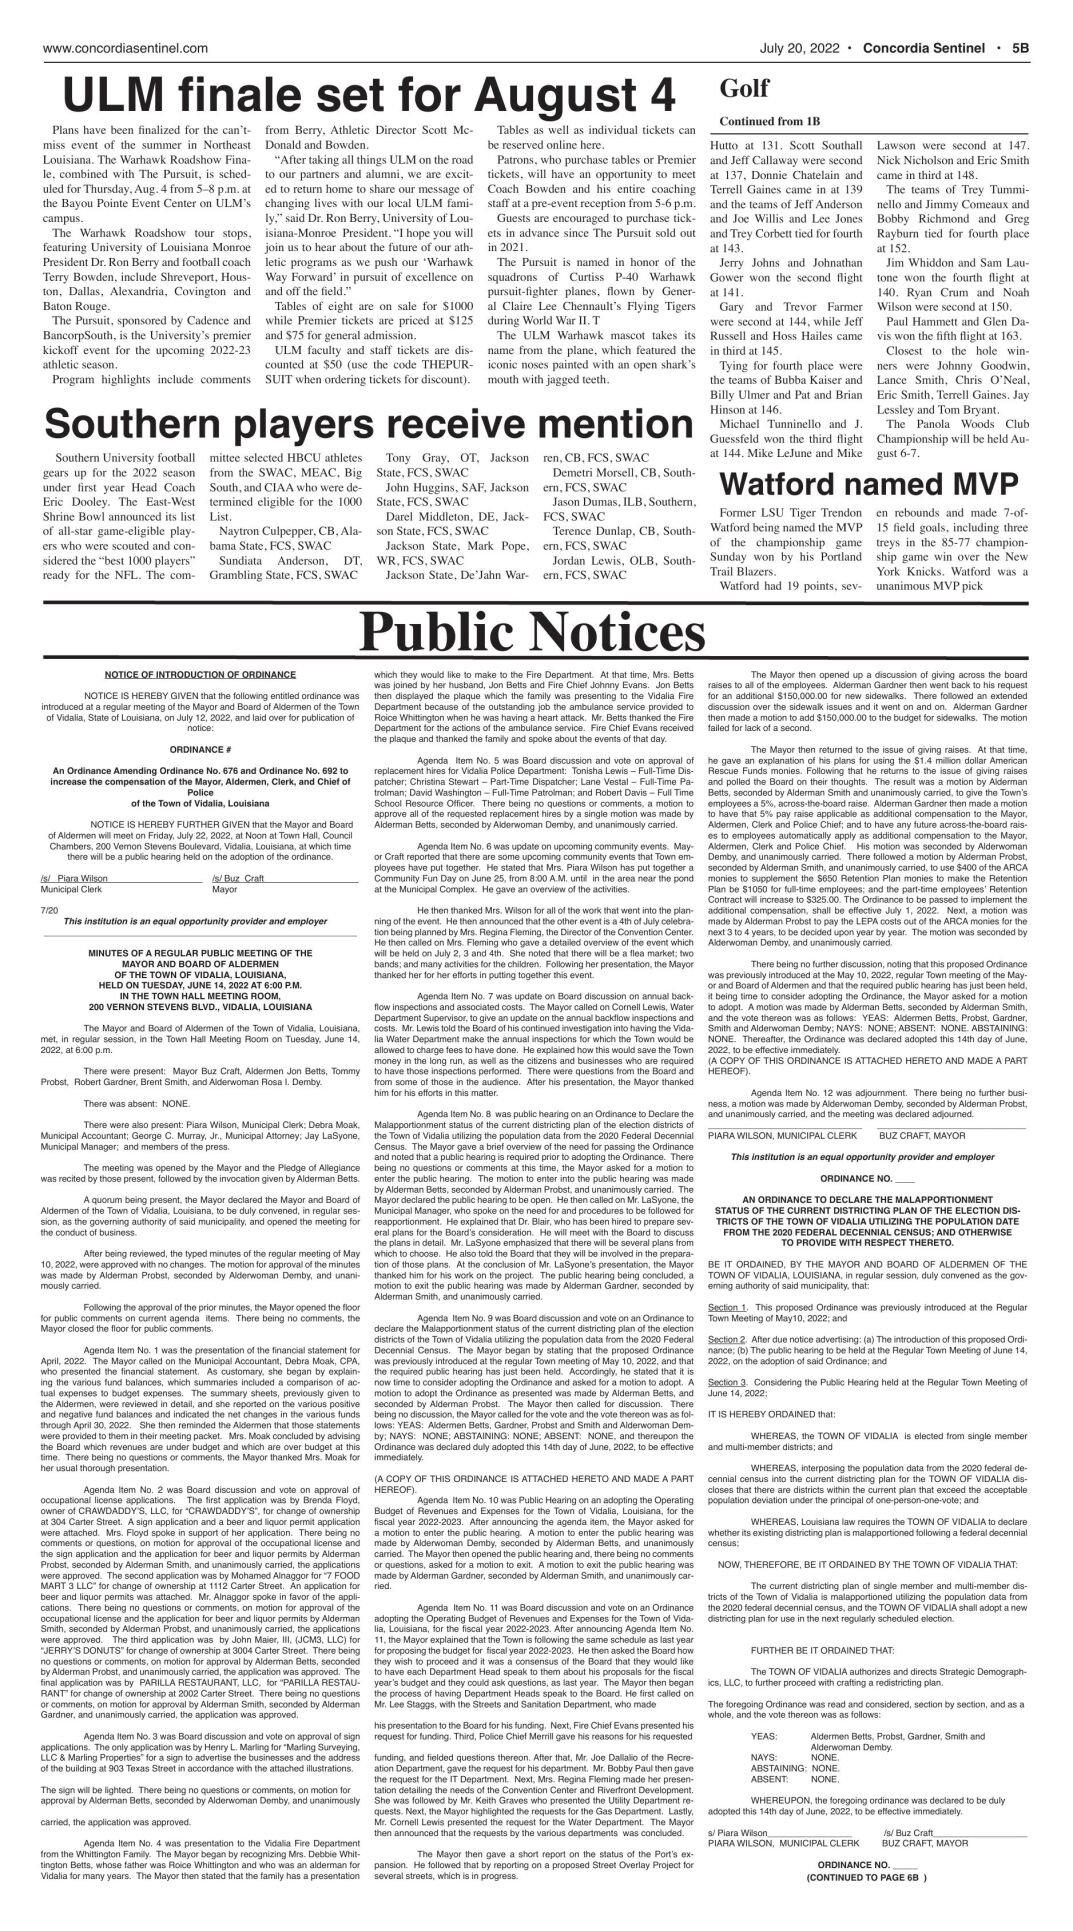 Public Notices - July 20, 2022